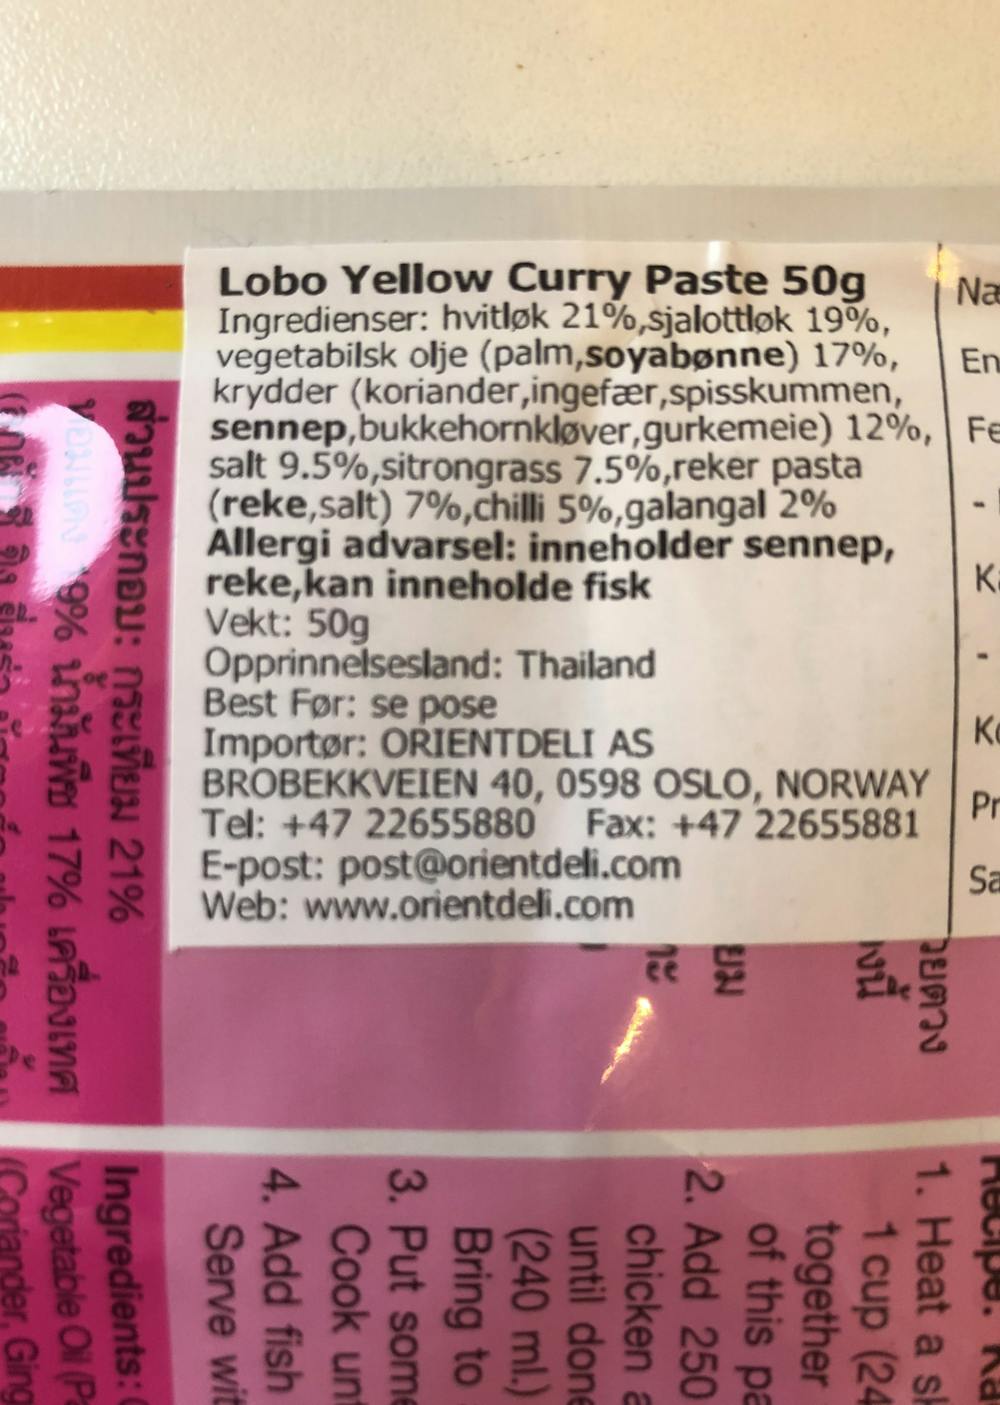 Ingredienslisten til Lobo Yellow curry paste